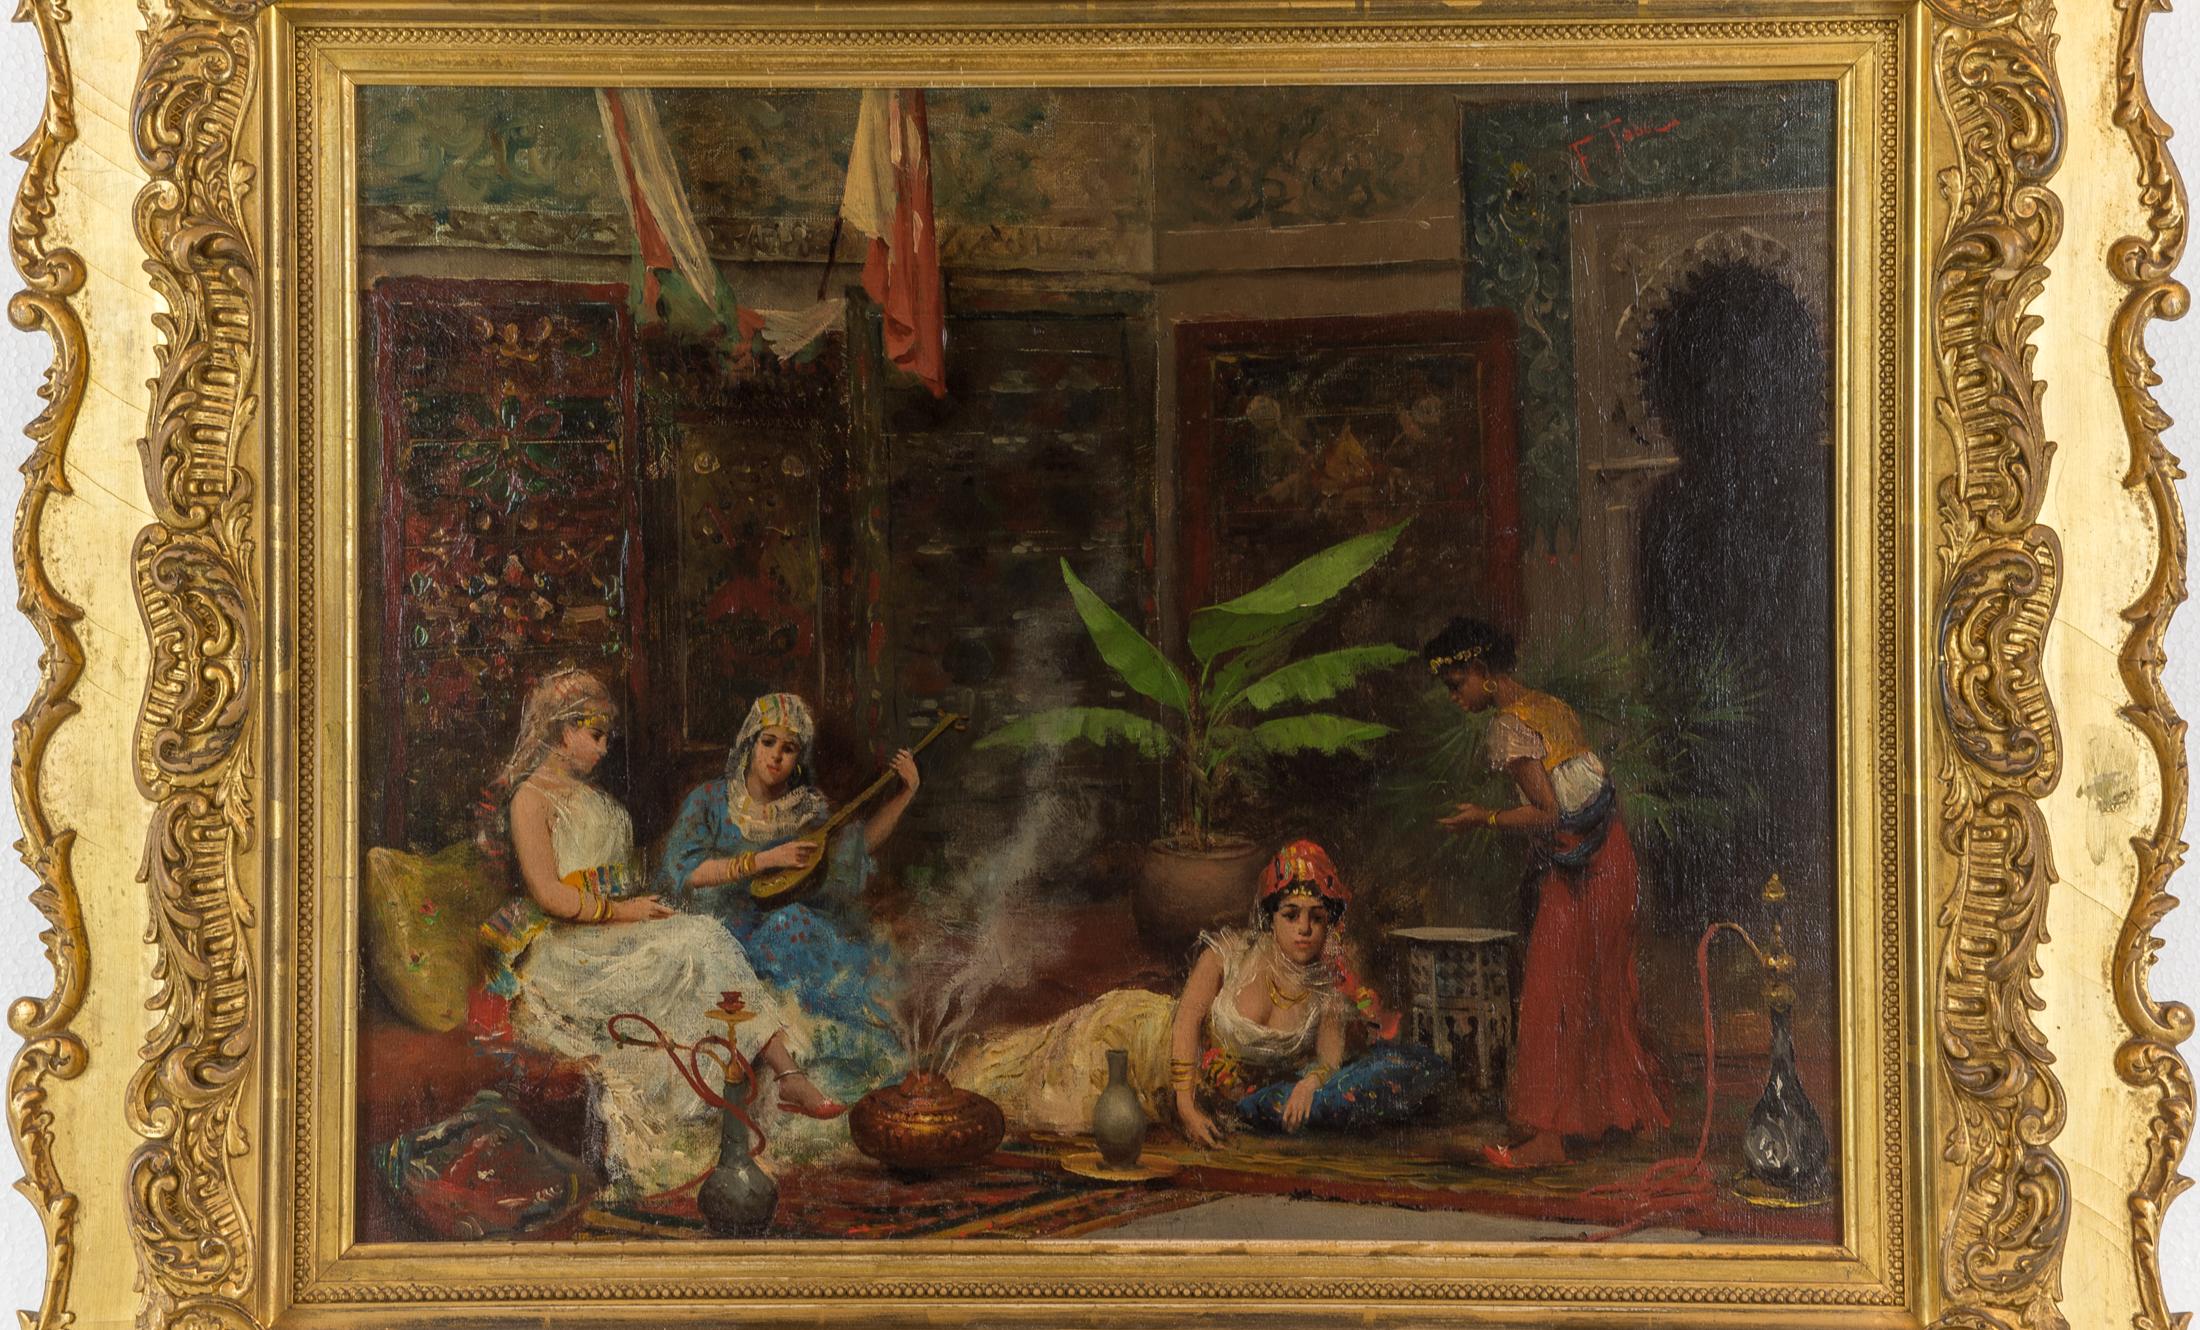 An exquisite orientalist painting depicting concubines in the harem by Fabio Fabbi

Artist: Fabio Fabbi (1861-1910)
Origin: Italian
Signature: signed F. Fabbi (upper right)
Medium: oil on canvas
Dimension: 14 in. x 18 in. (image); 21 3/4 x 25